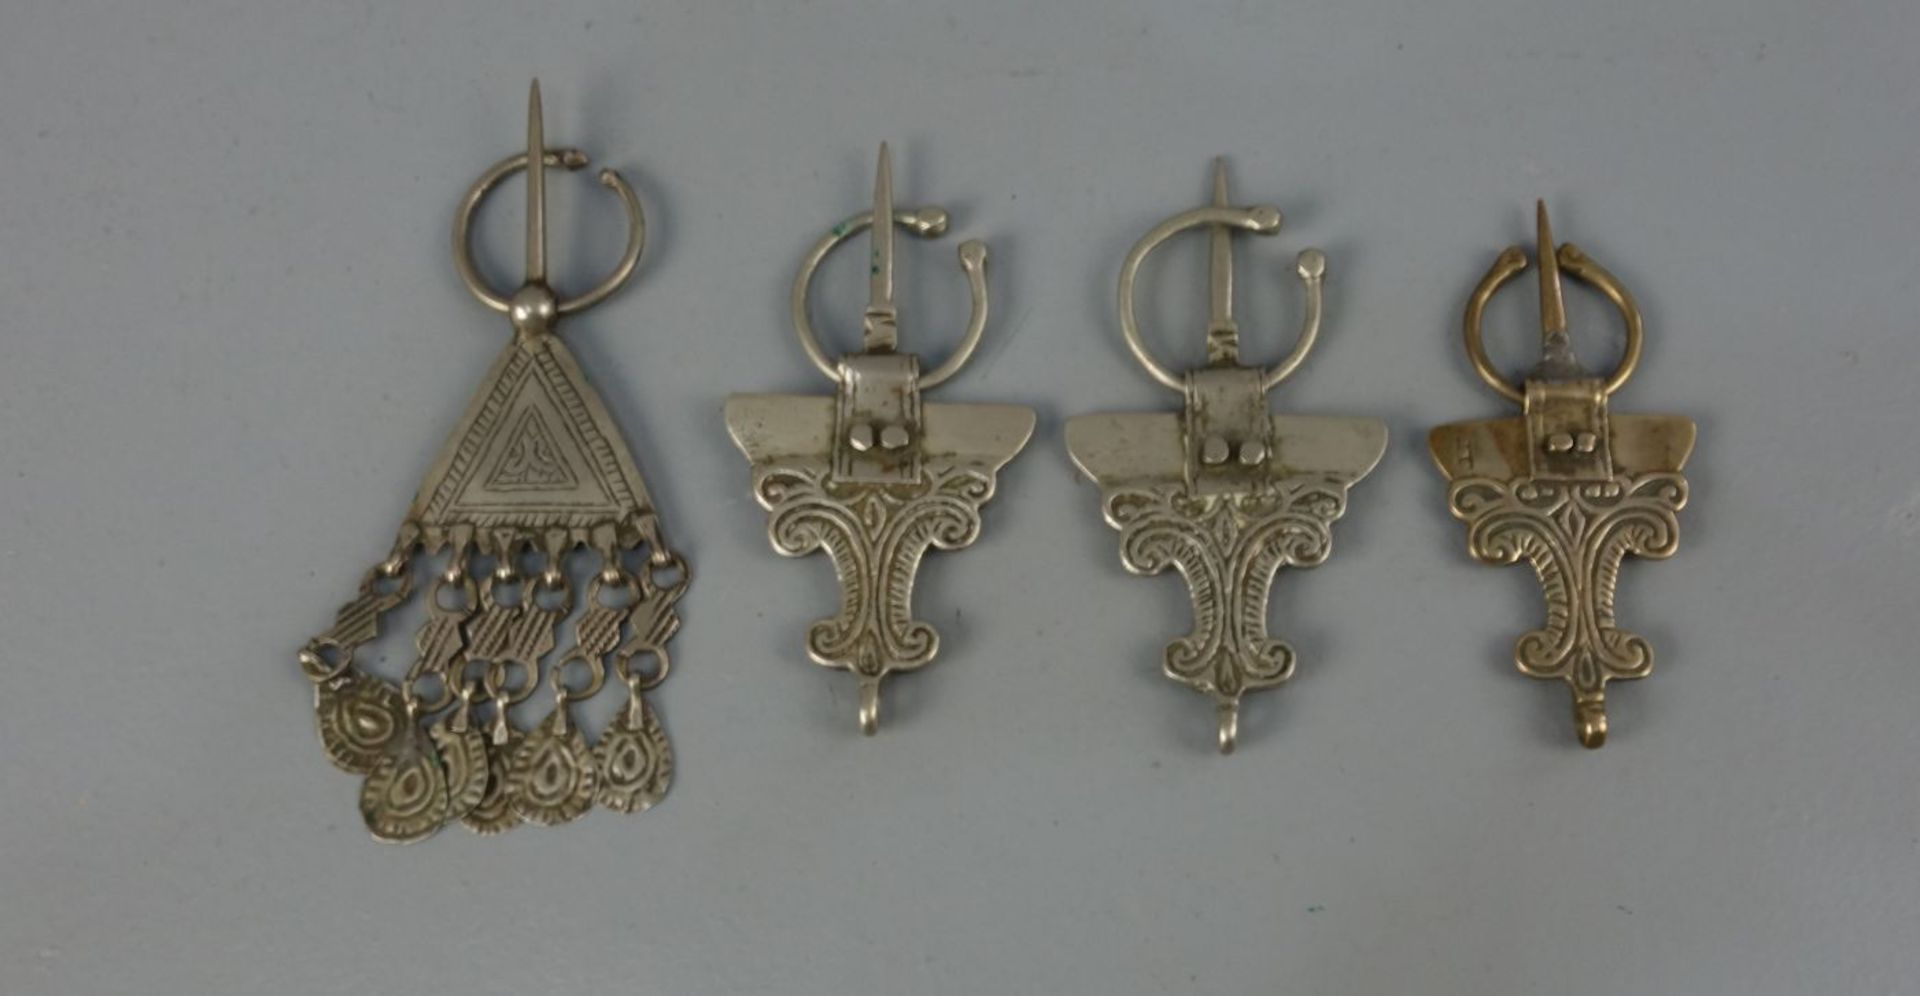 BERBER-SCHMUCK: ZWEI FIBELPAARE / oriental jewellery, Talliouline, Marokko, Silber und